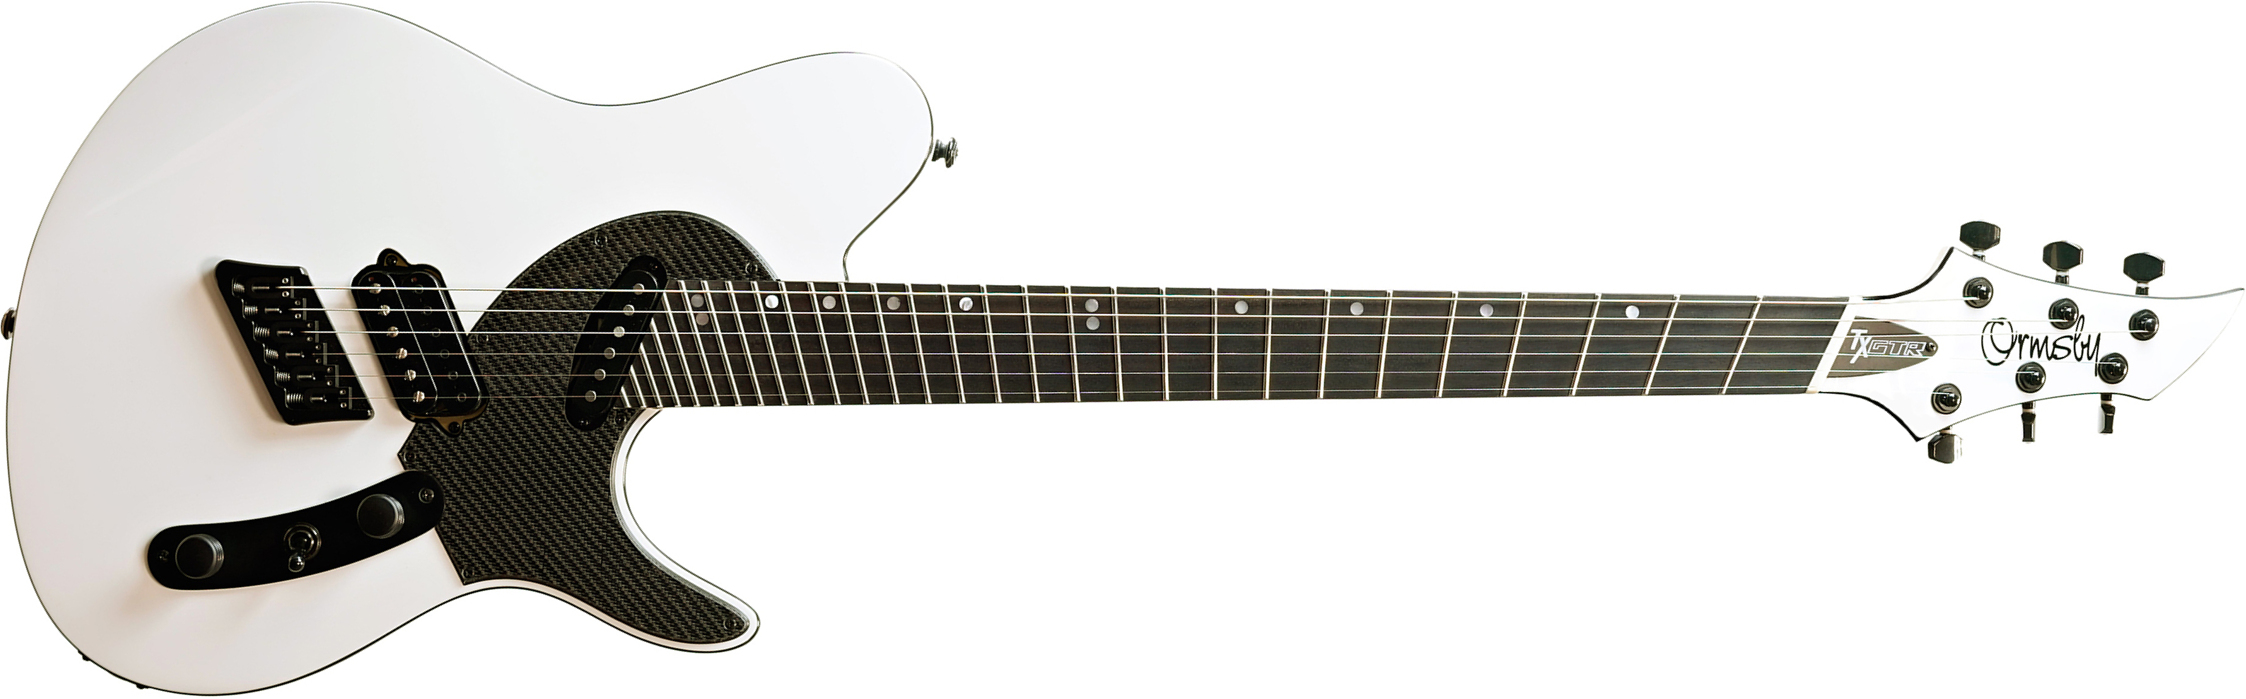 Ormsby Tx Gtr Carbon 6c Multiscale Hs Ht Eb - Ermine White - Guitarra eléctrica con forma de tel - Main picture